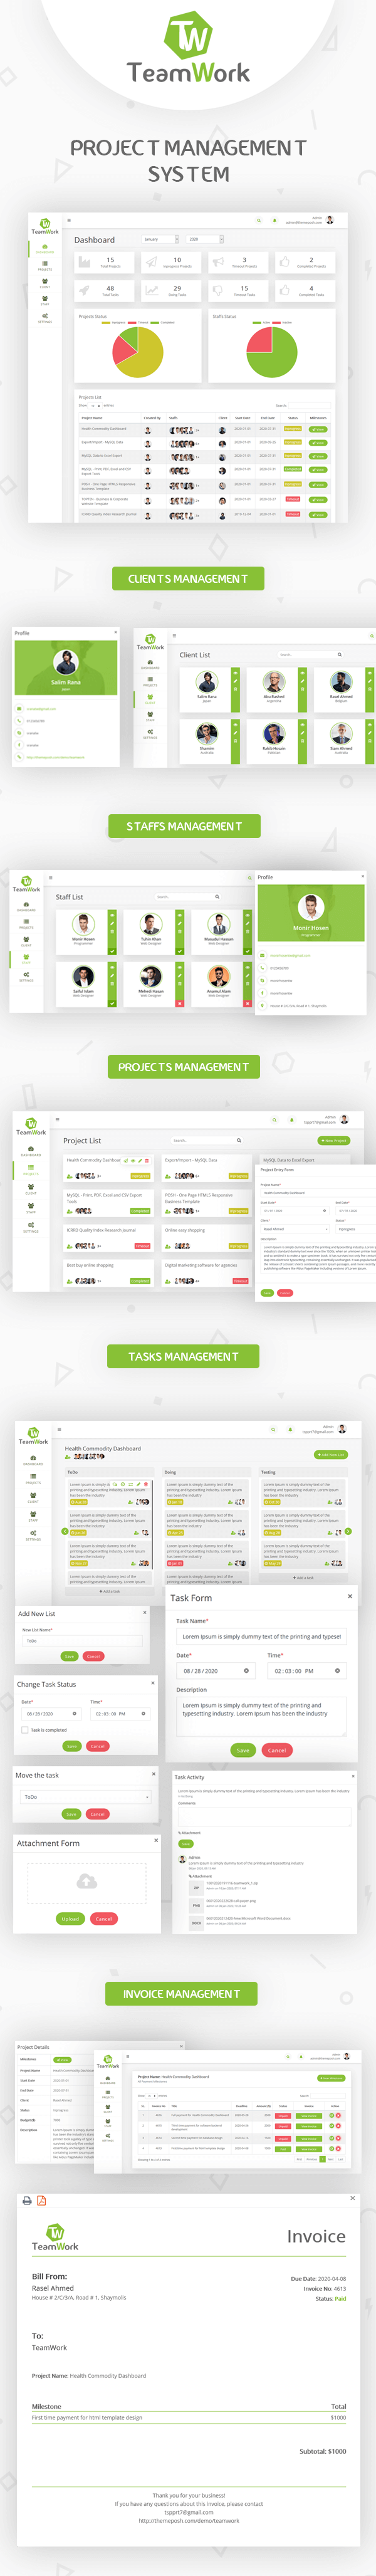 TeamWork - Project Management System - 3